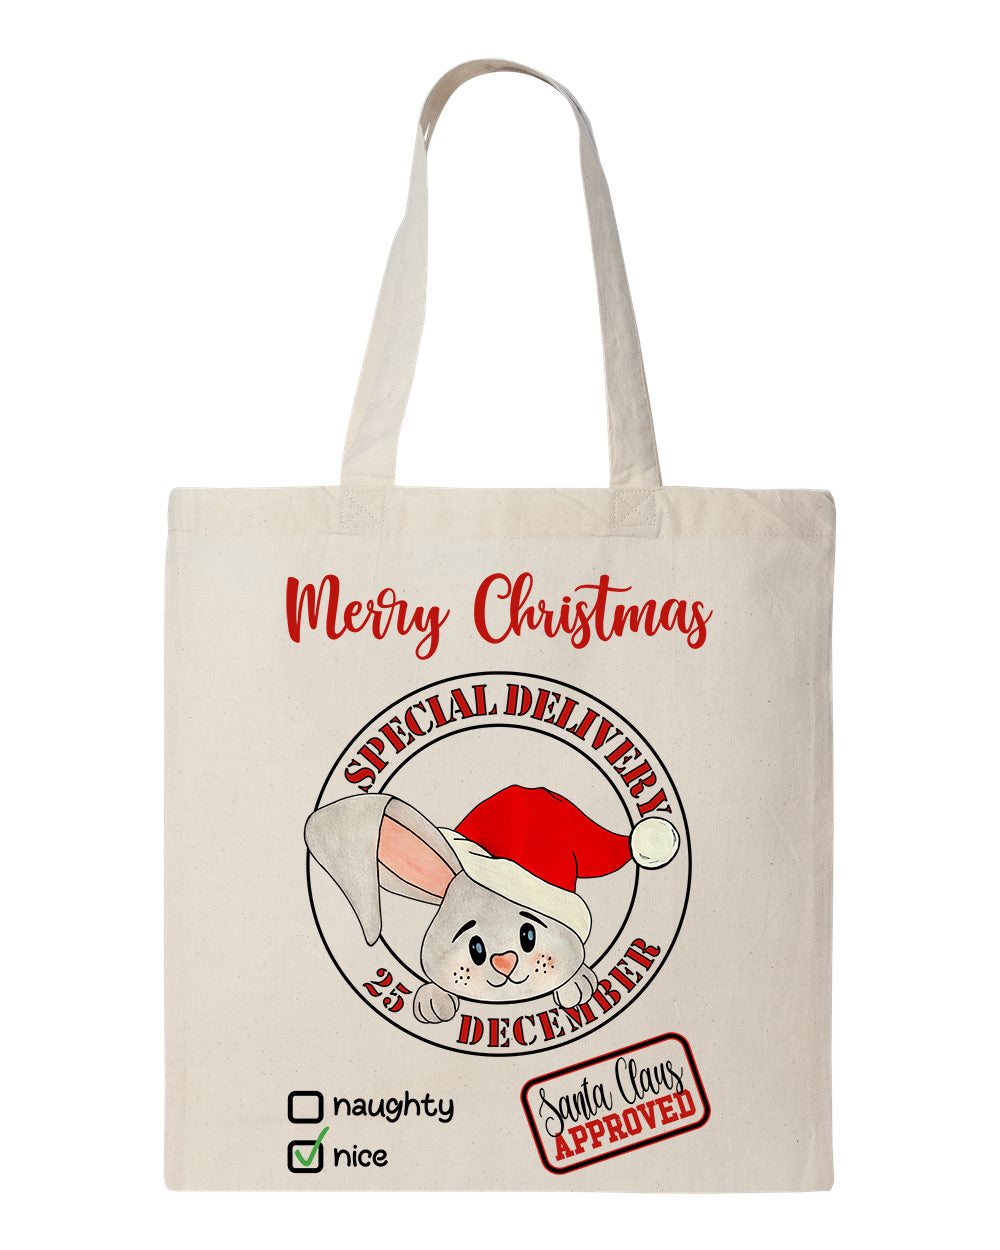 Special Delivery Bunny Tote Bag